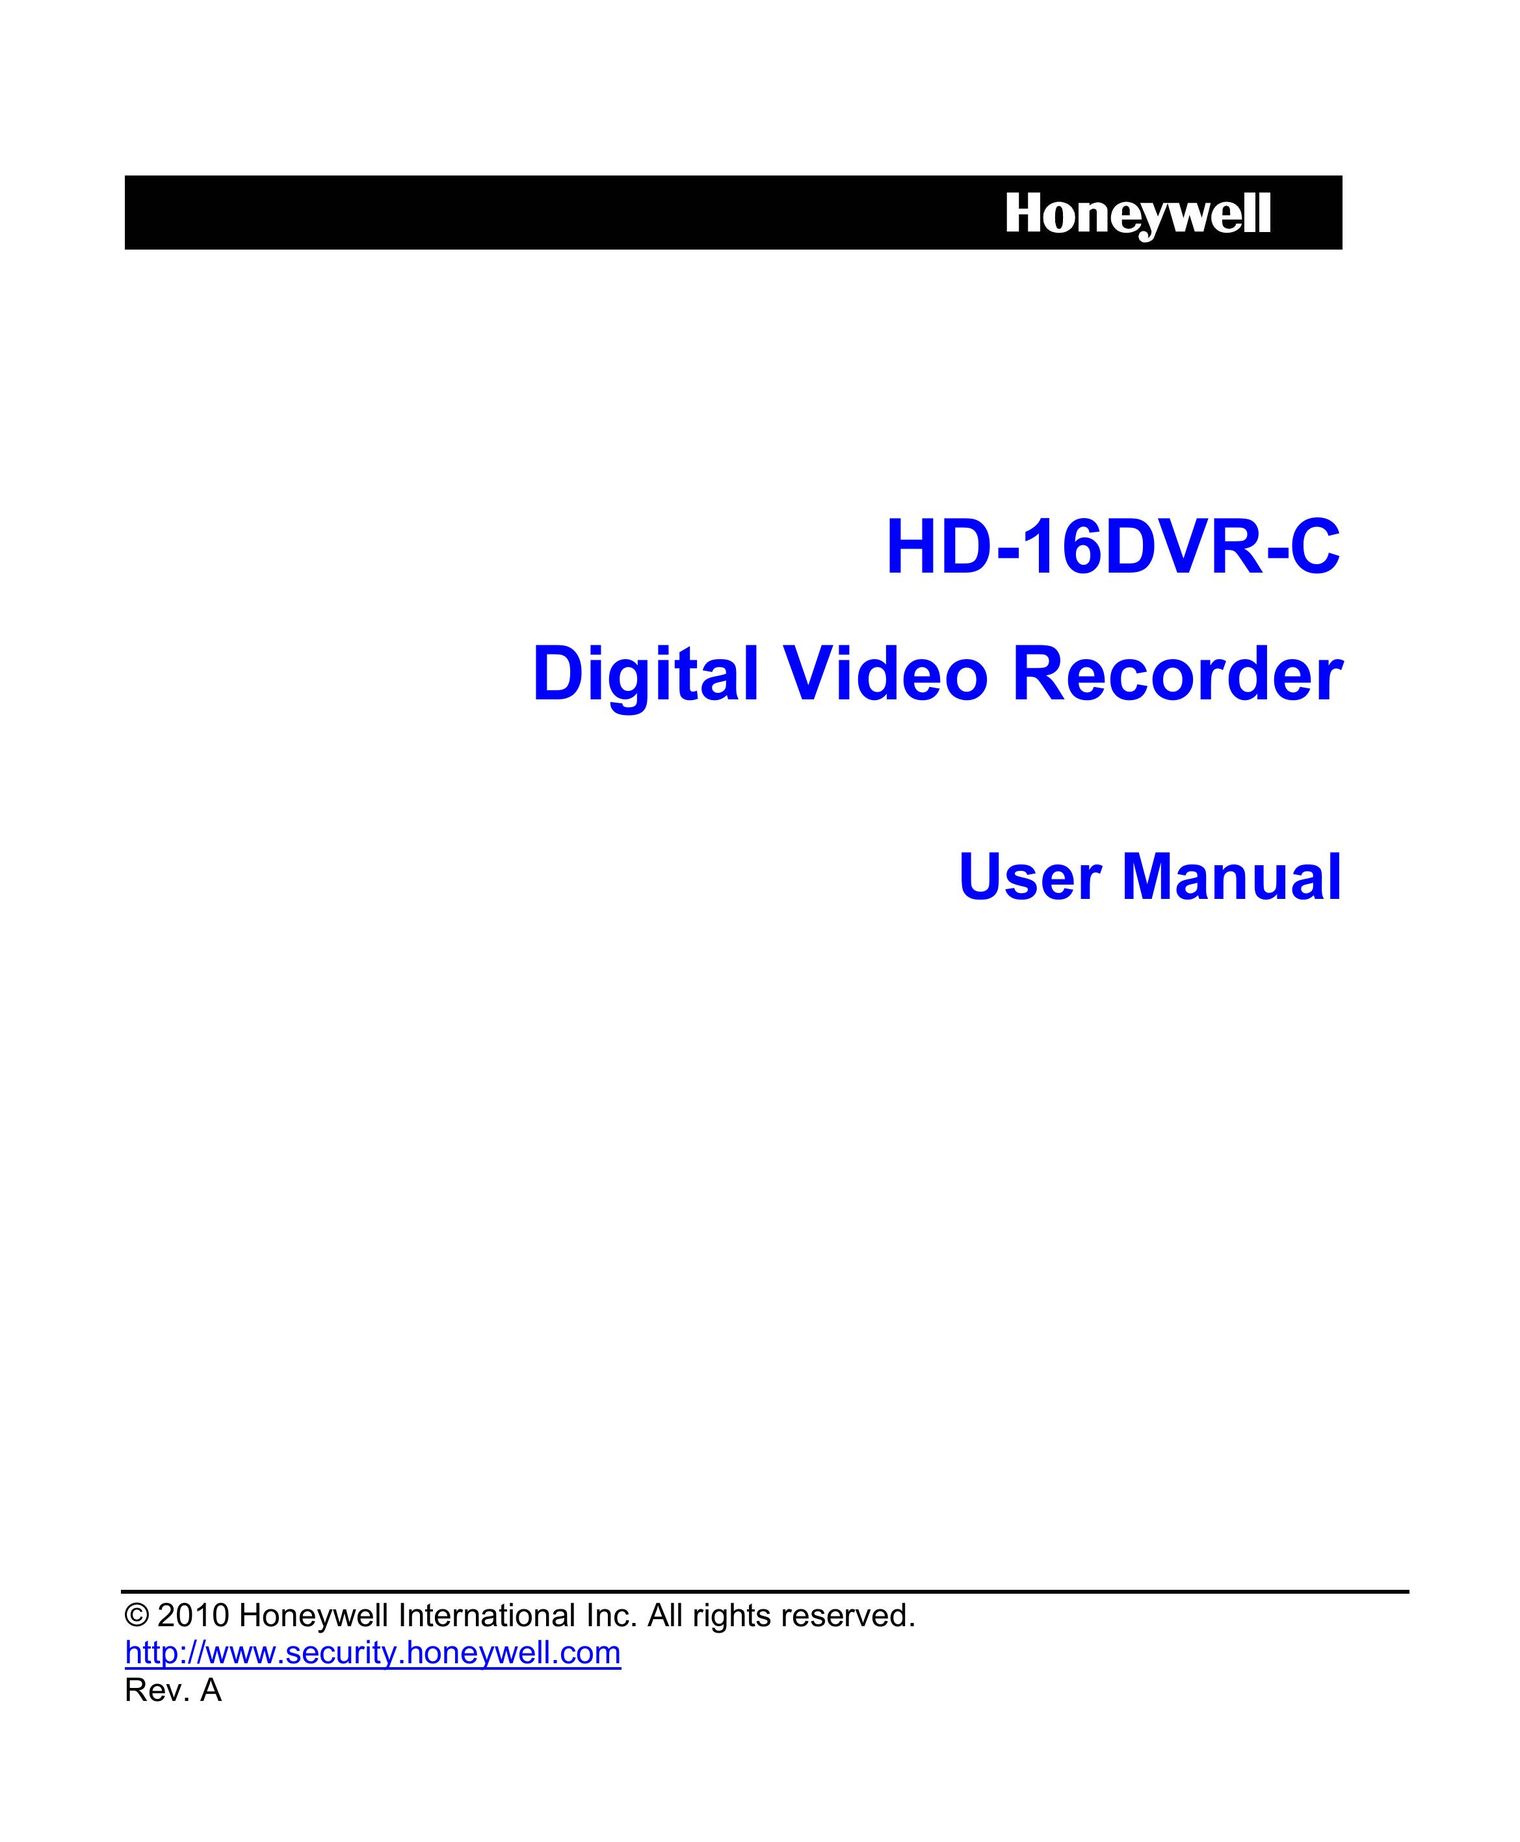 Honeywell HD-16DVR-C DVR User Manual